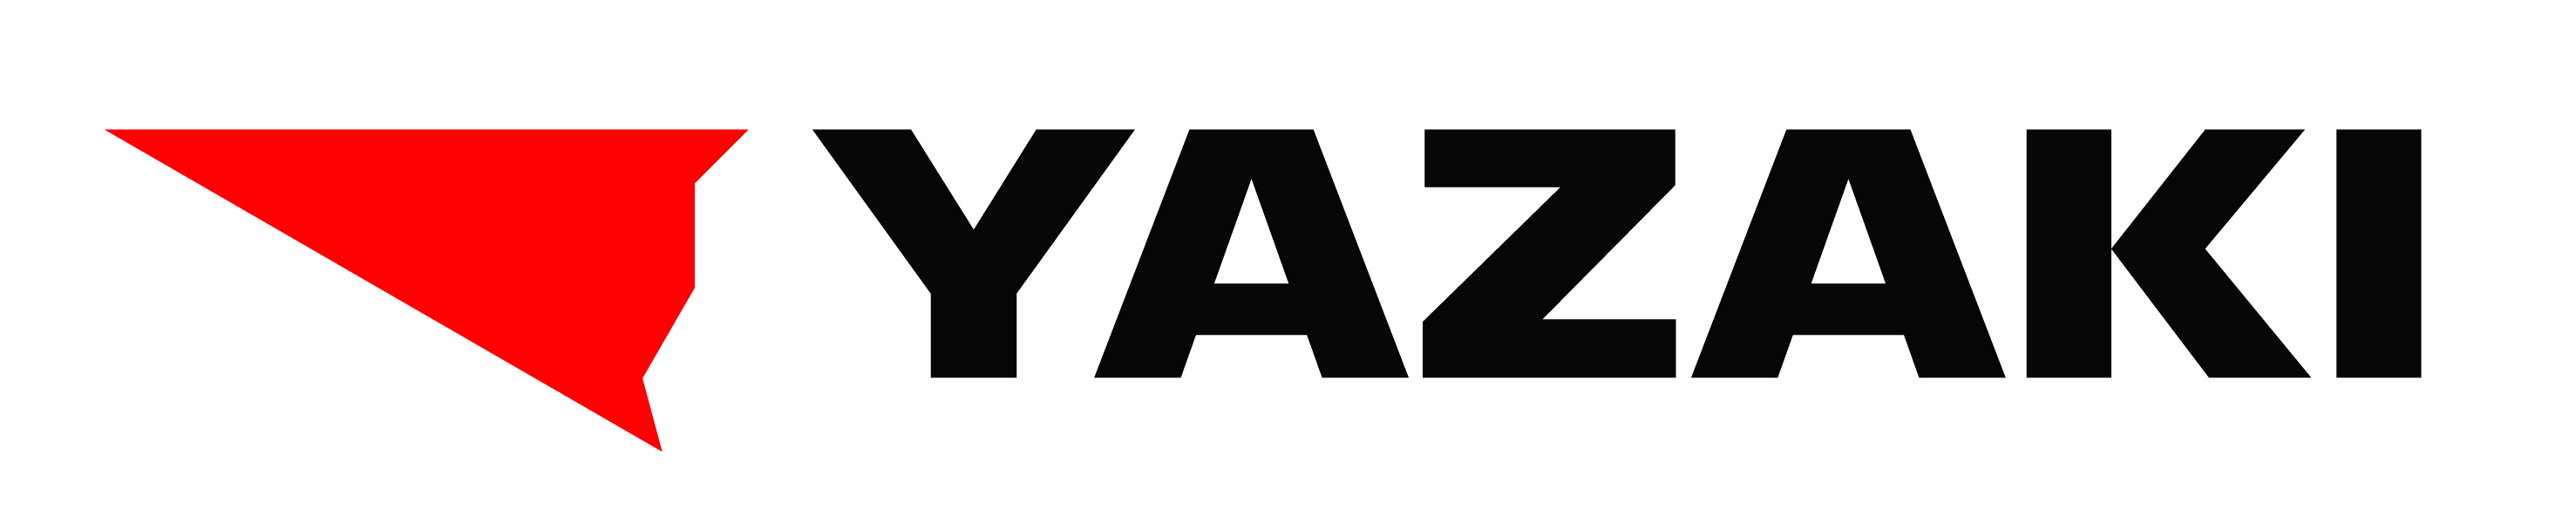 #InternYazaki Social Campaign - Logo - https://s41078.pcdn.co/wp-content/uploads/2018/11/User-Generated-Content.jpg